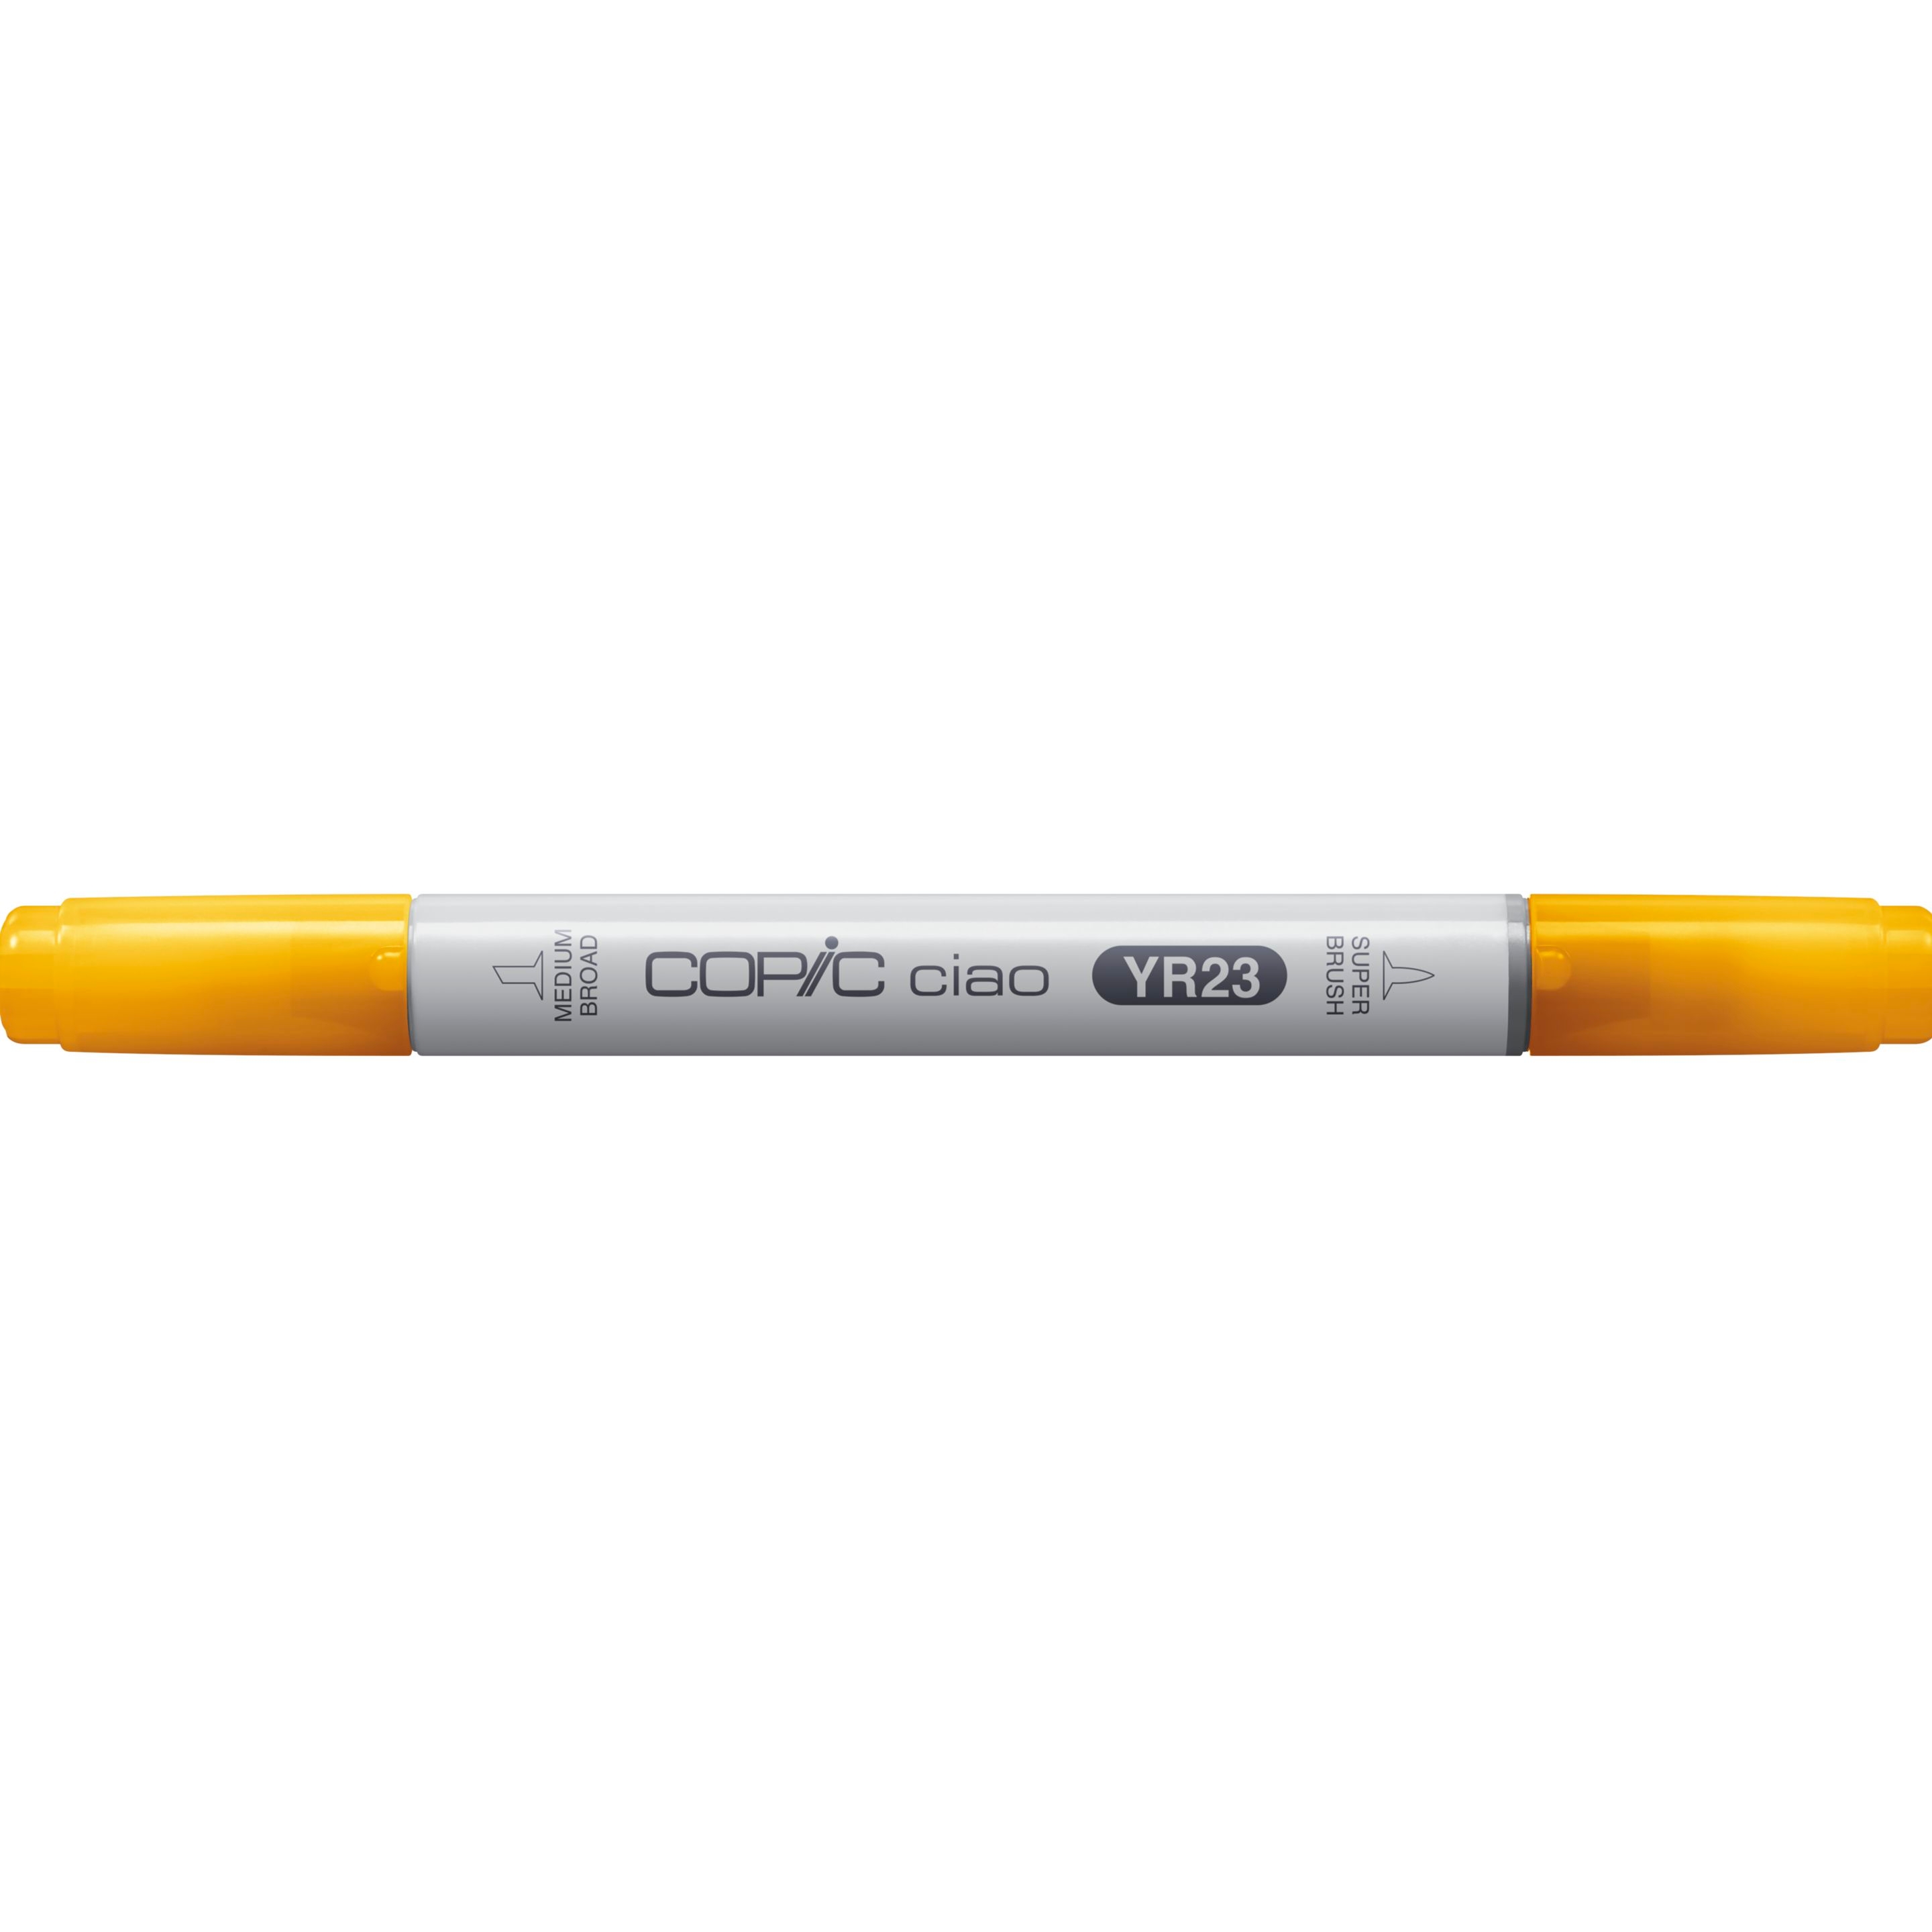 COPIC Marker Ciao 2207583 YR23 - Yellow Ochre6